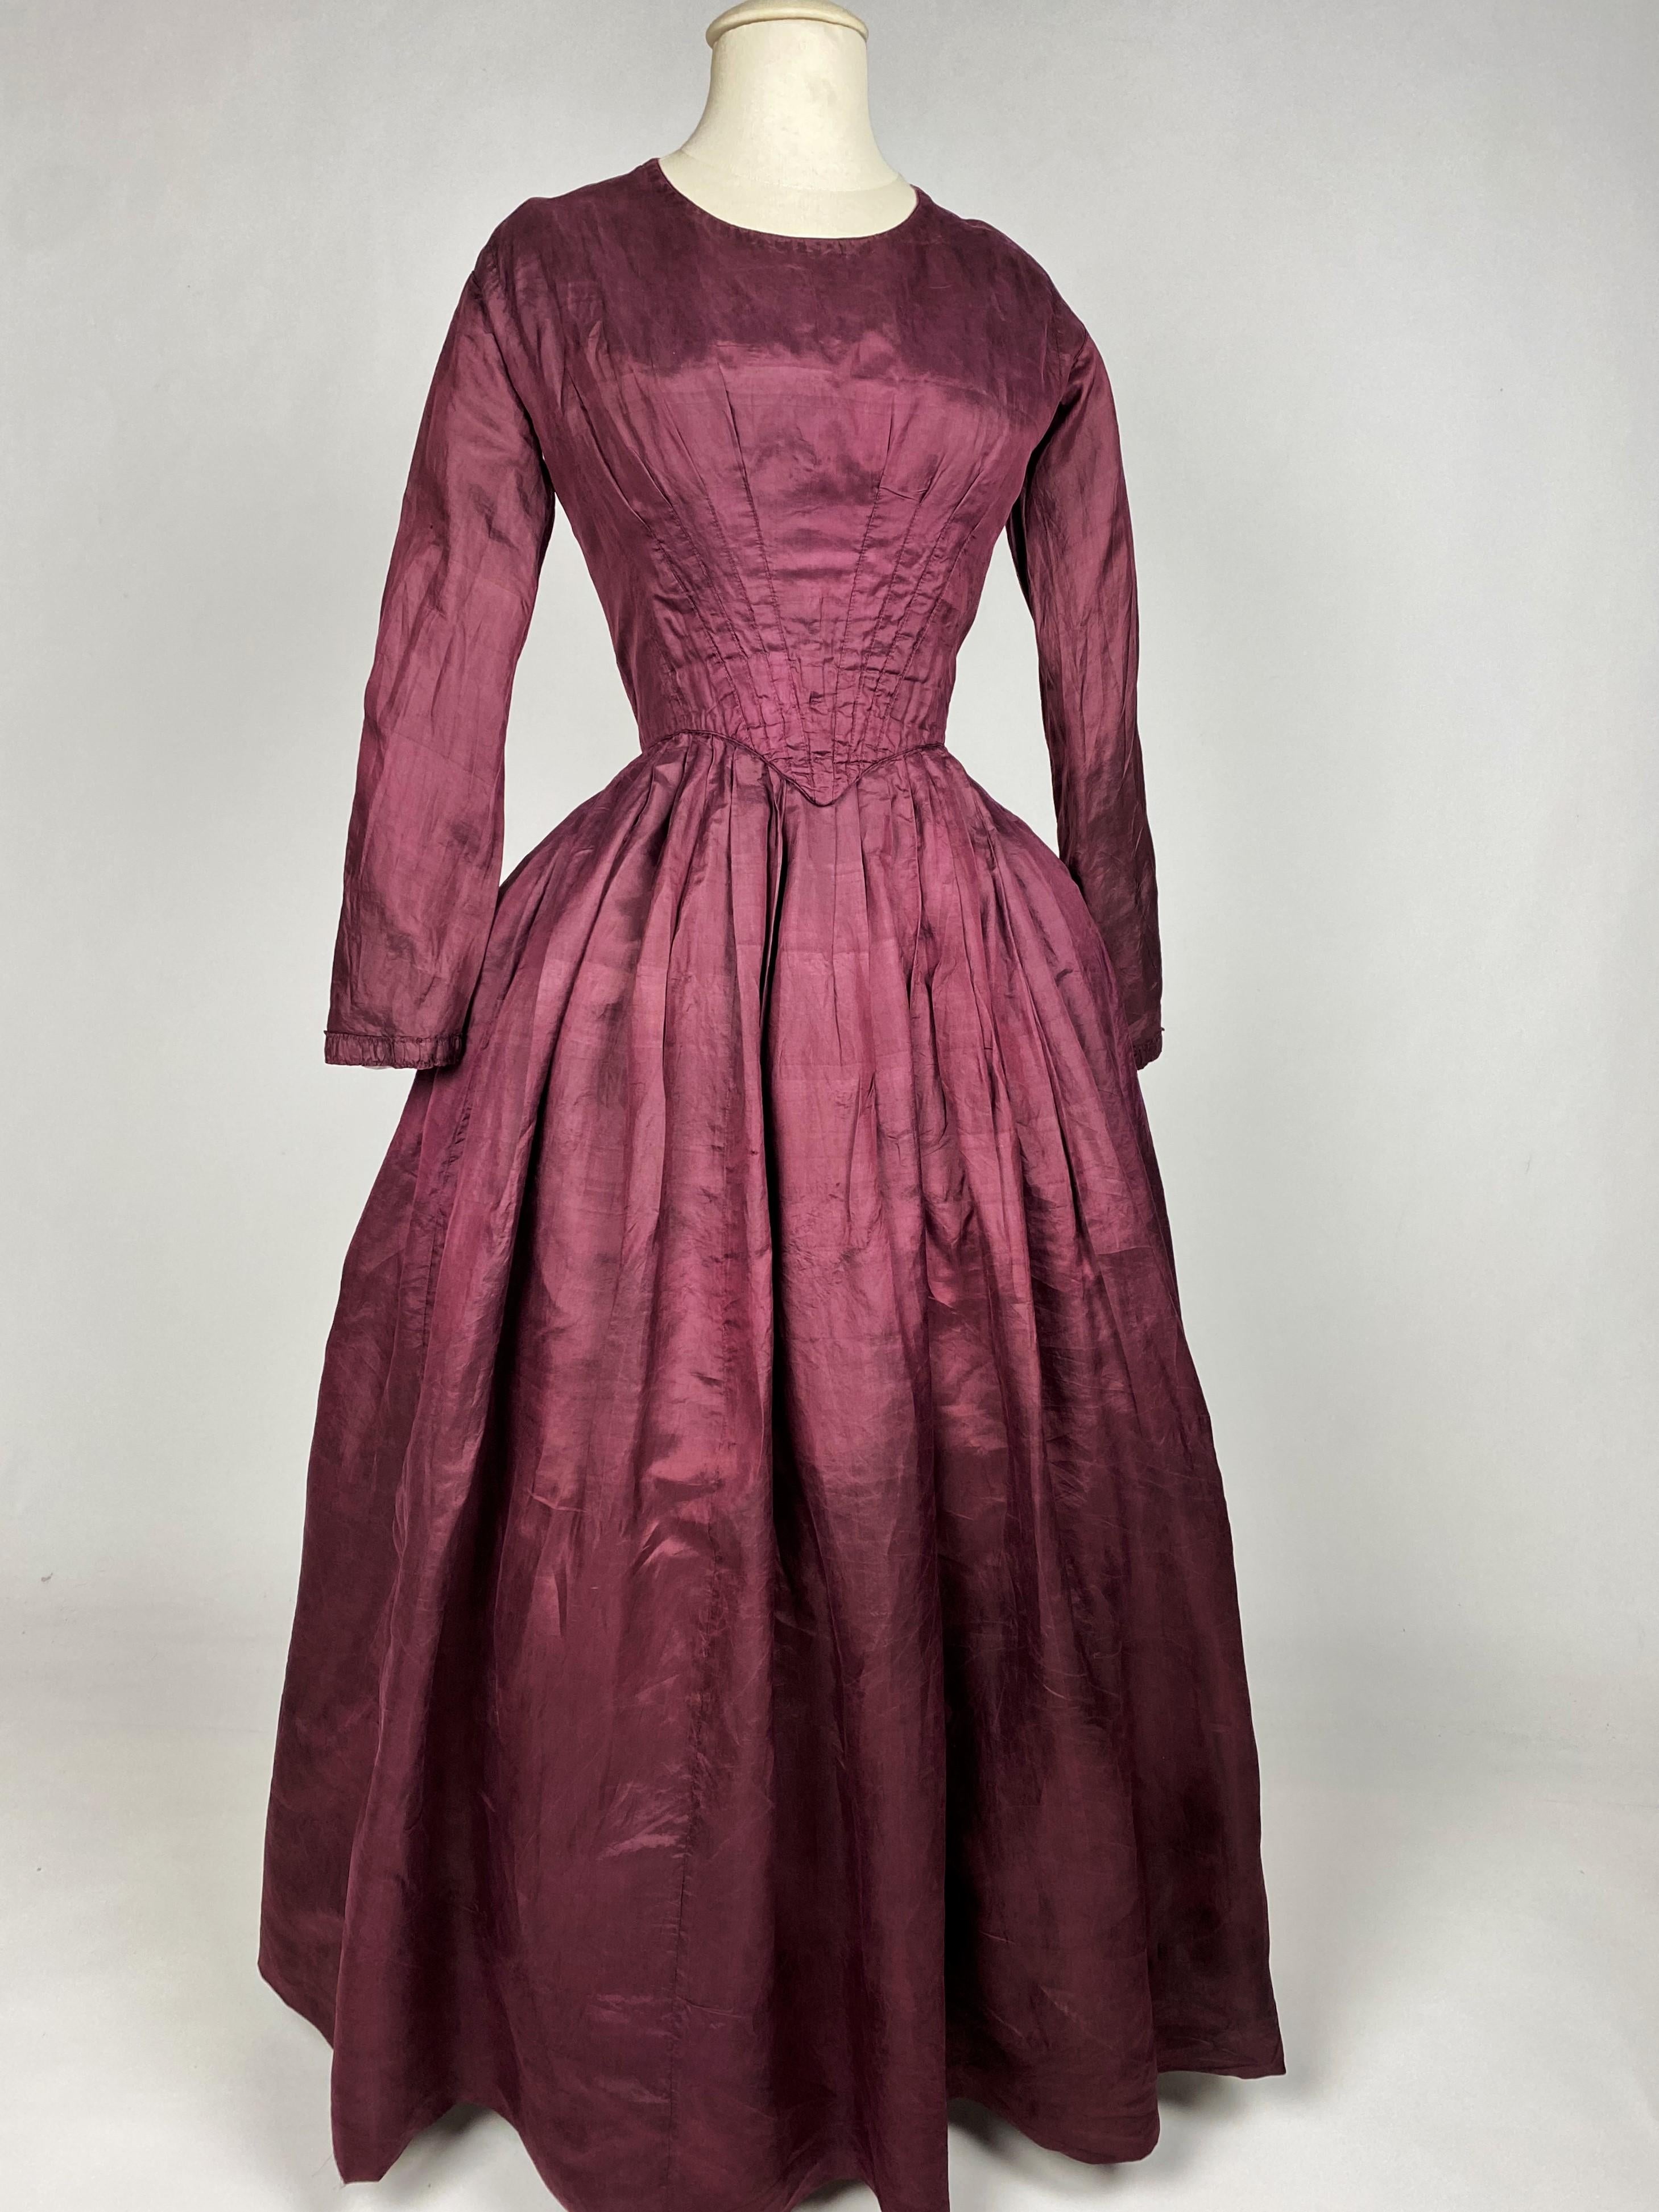 1845 women's fashion